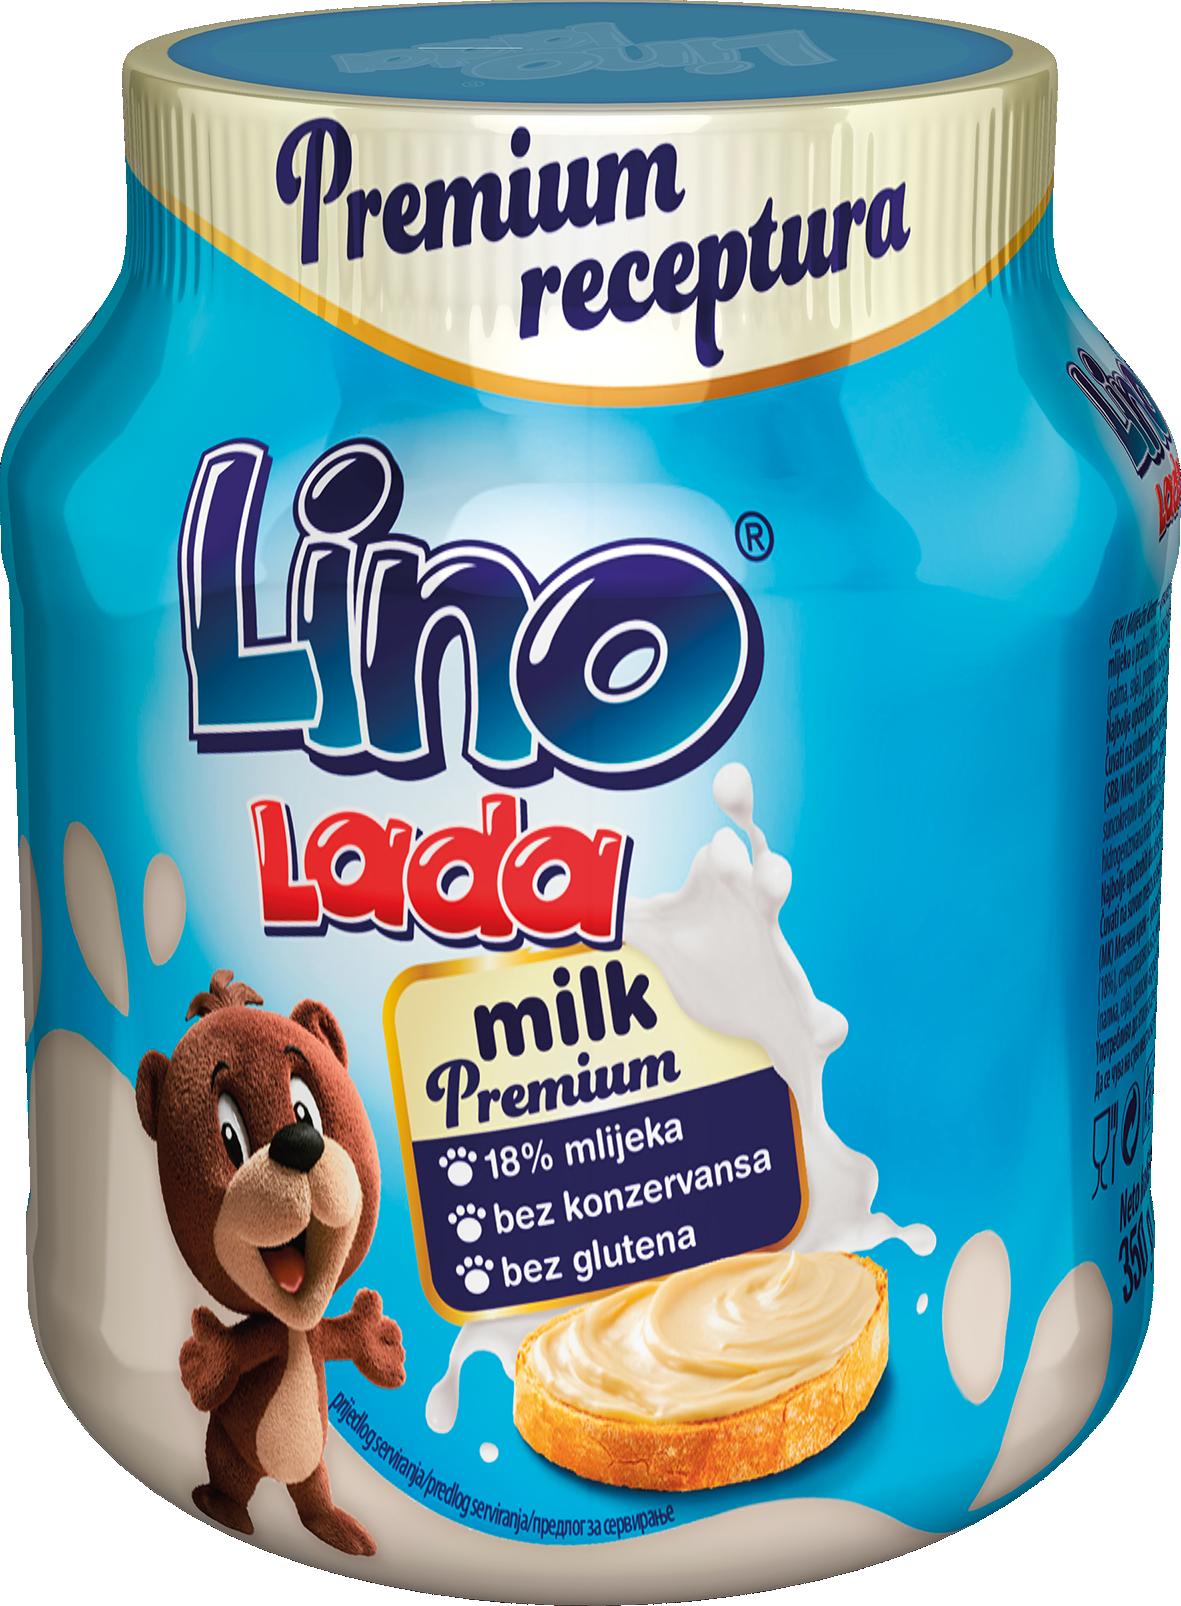 Slika za Krem Lino Lada milk 350g